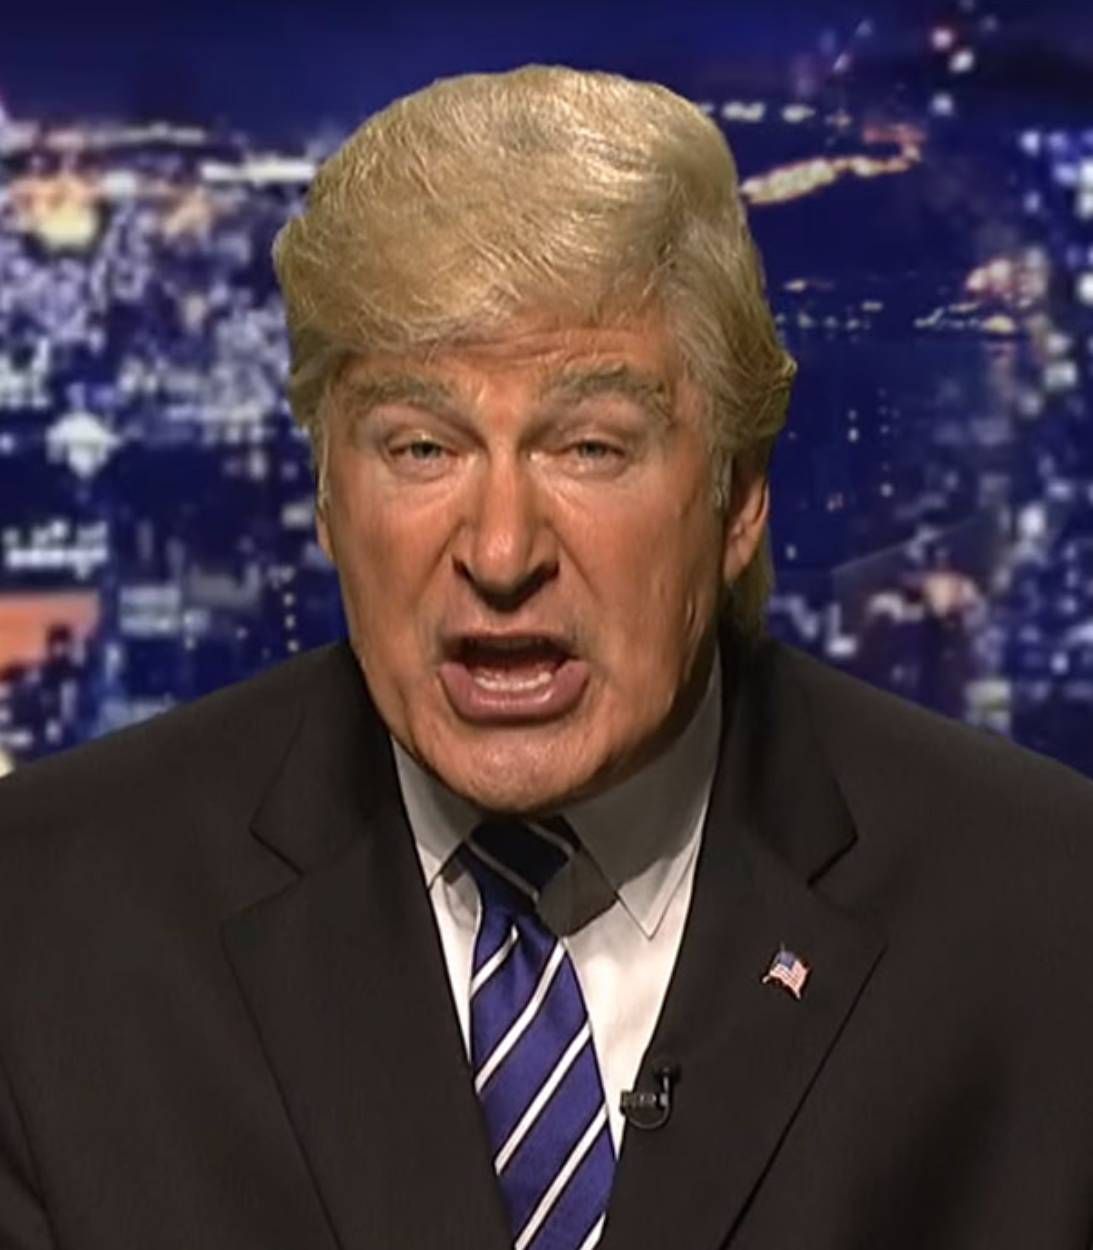 Alec Baldwin as Donald Trump on Saturday Night Live image pic vertical